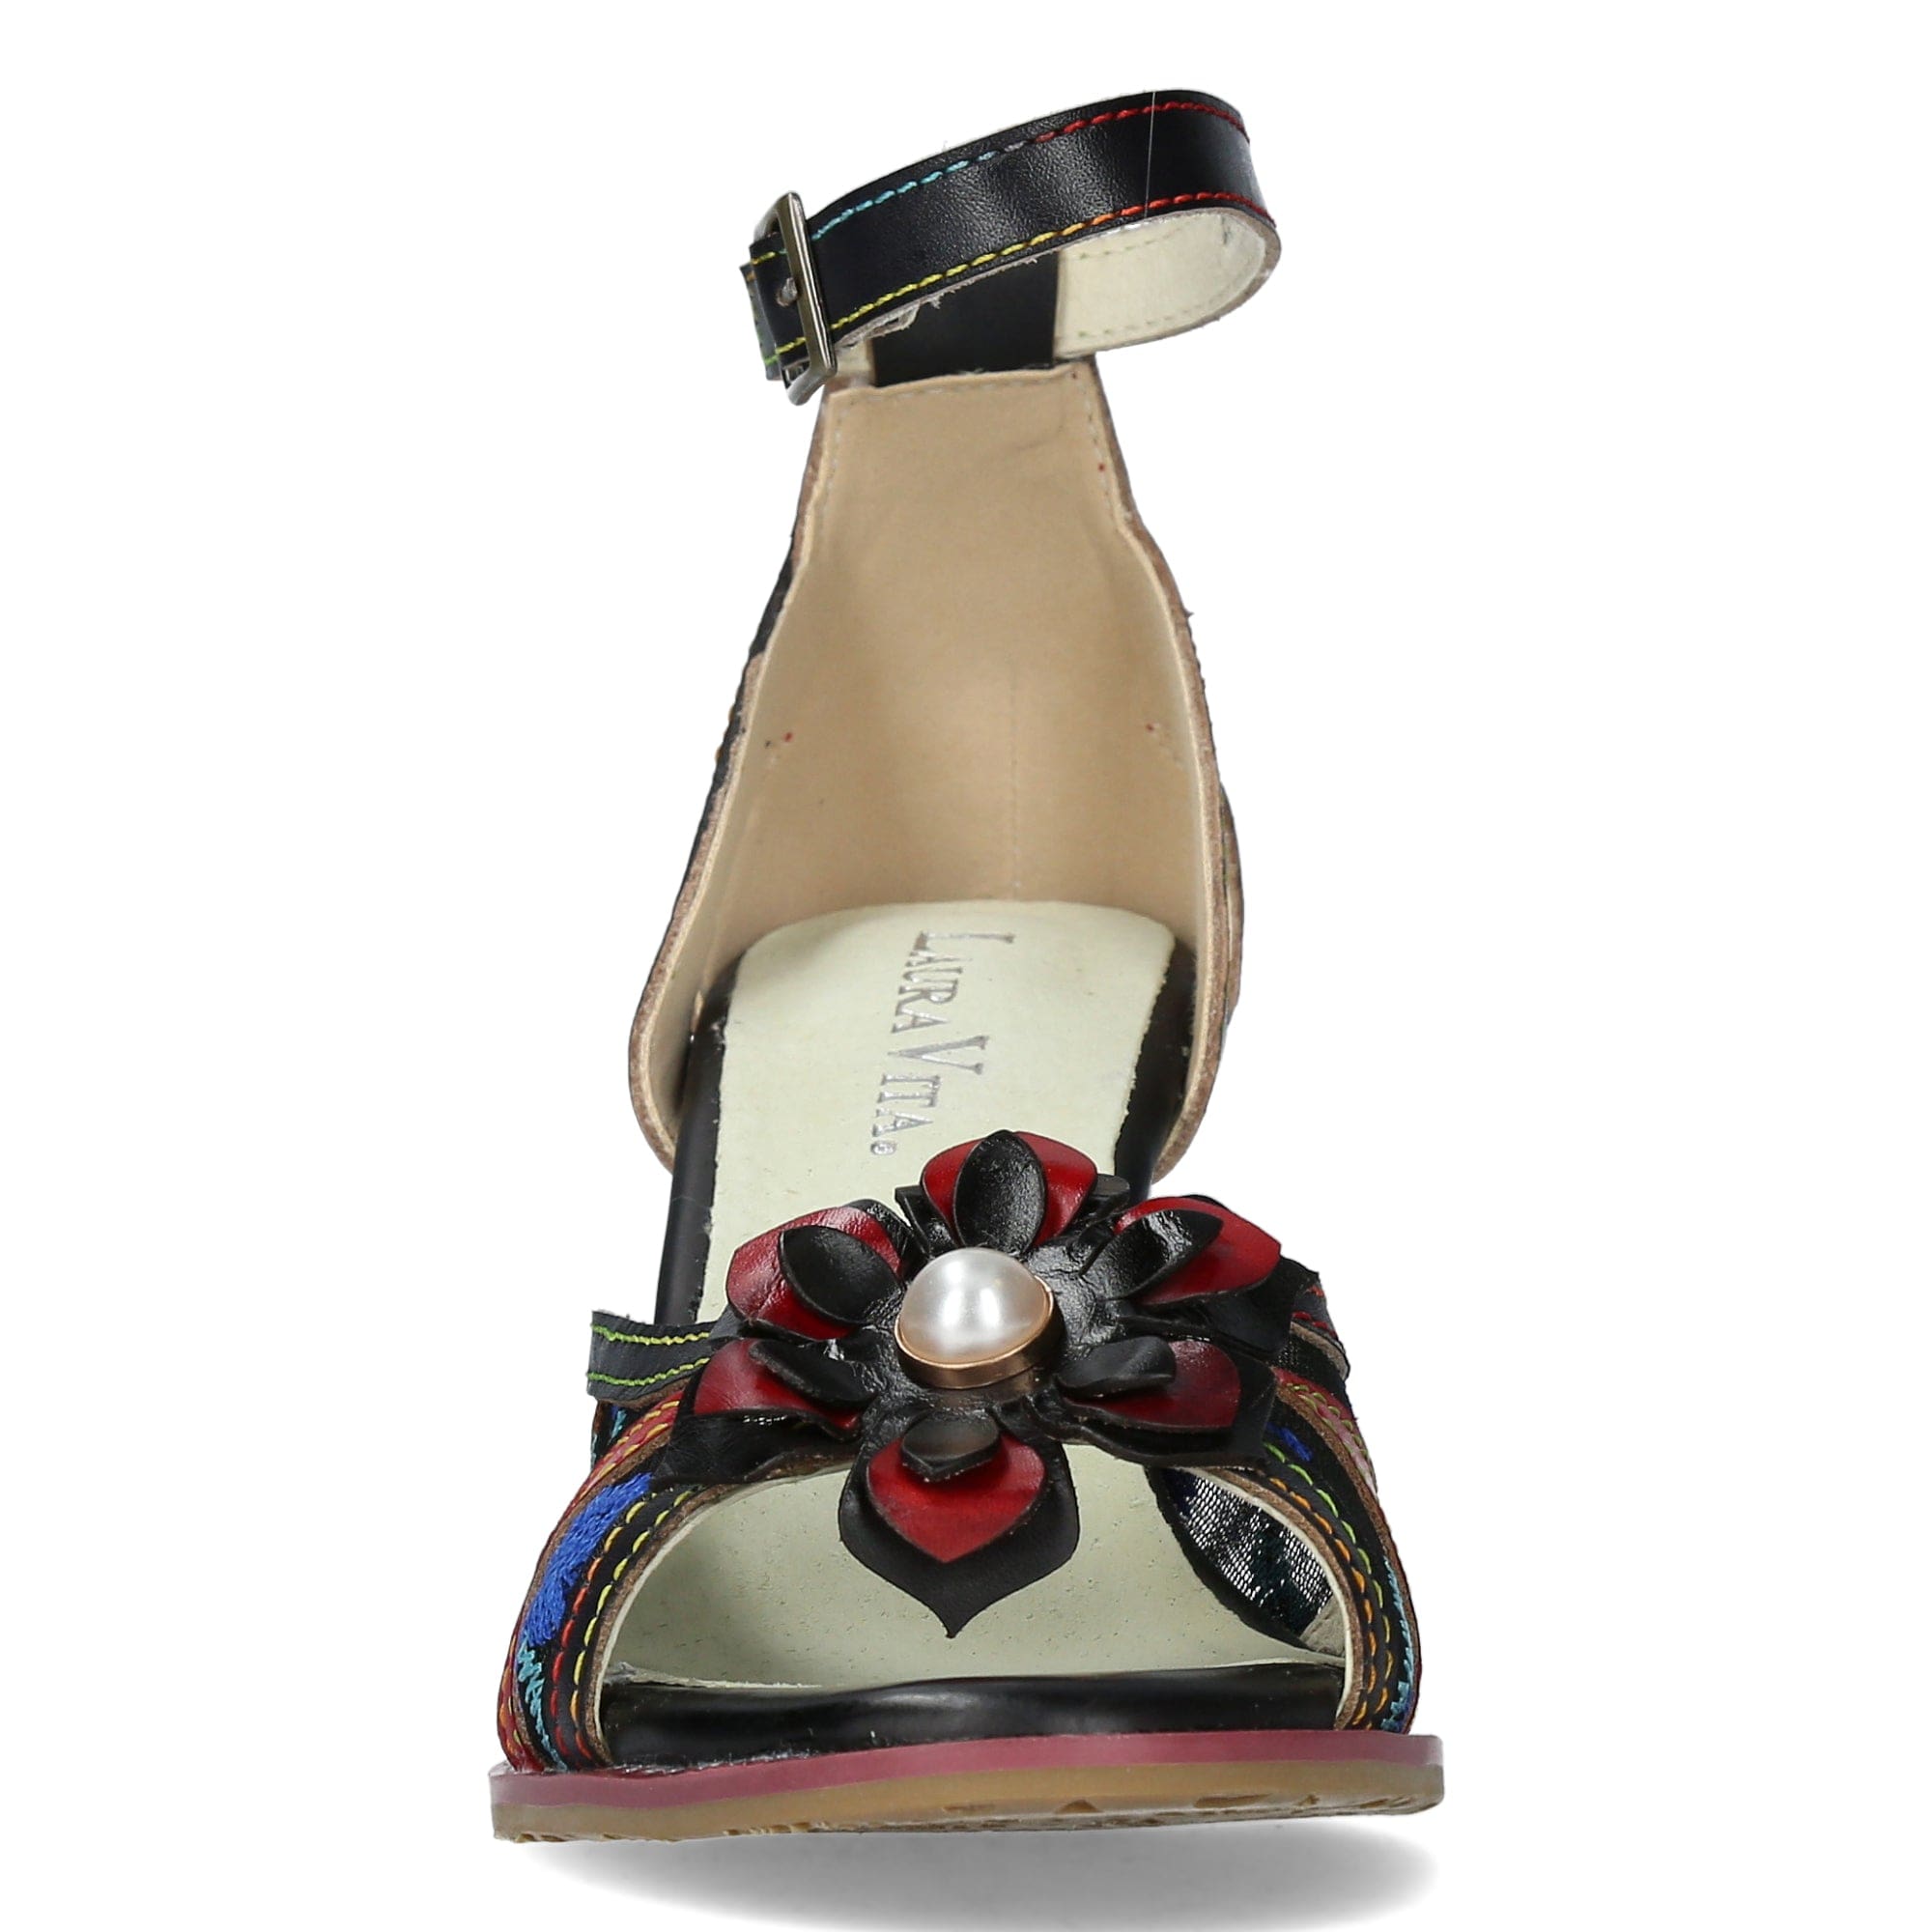 Chaussure LEDAO 23 - Sandale